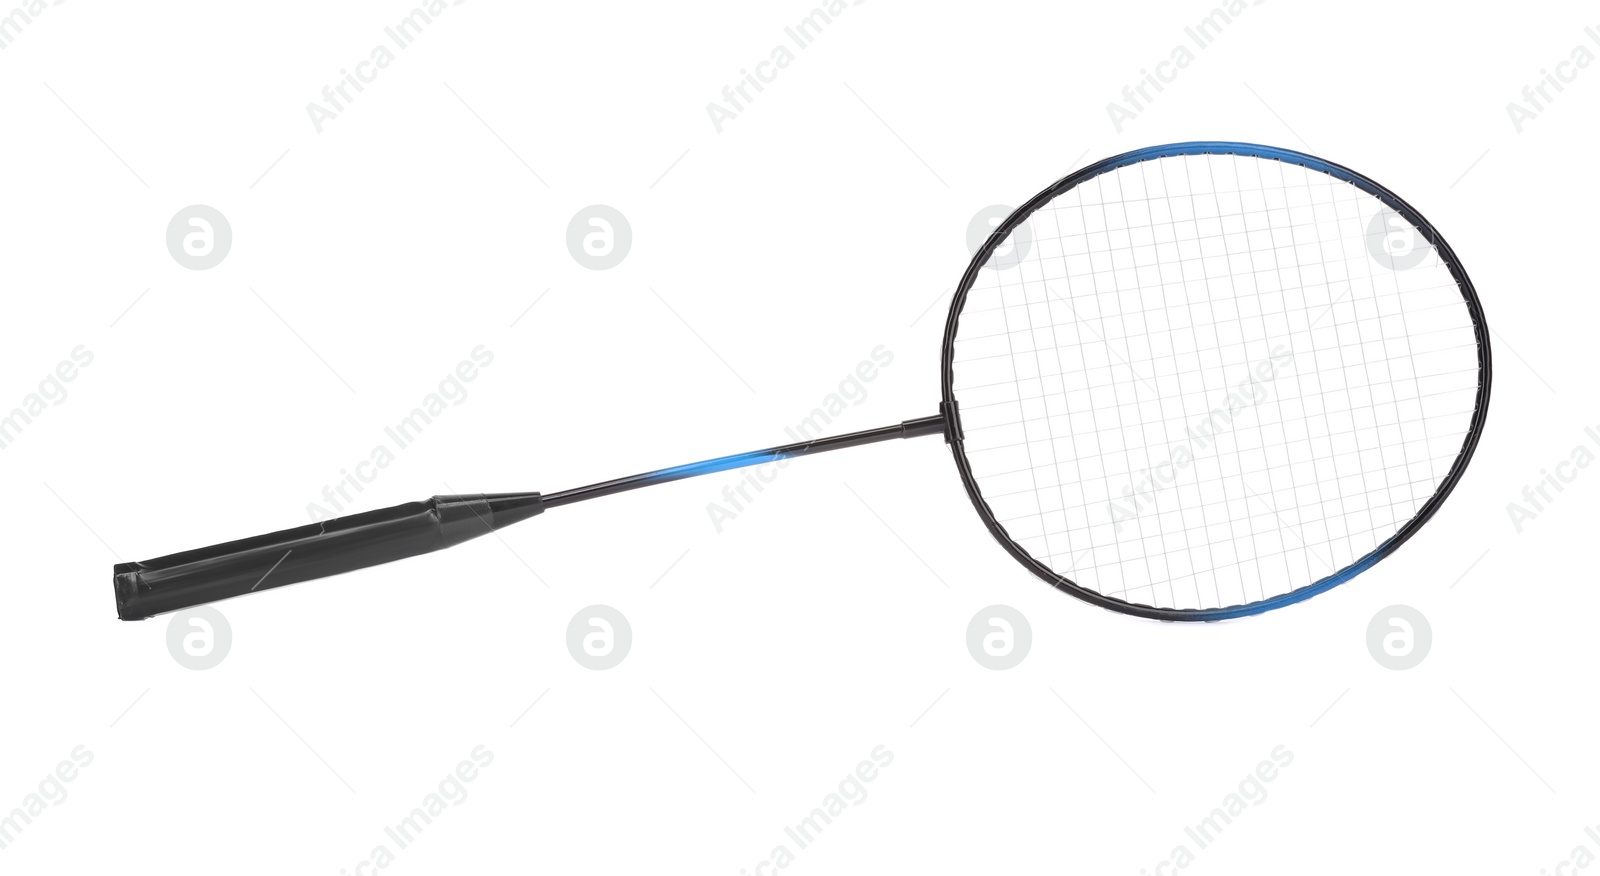 Photo of Badminton racket isolated on white. Sports equipment